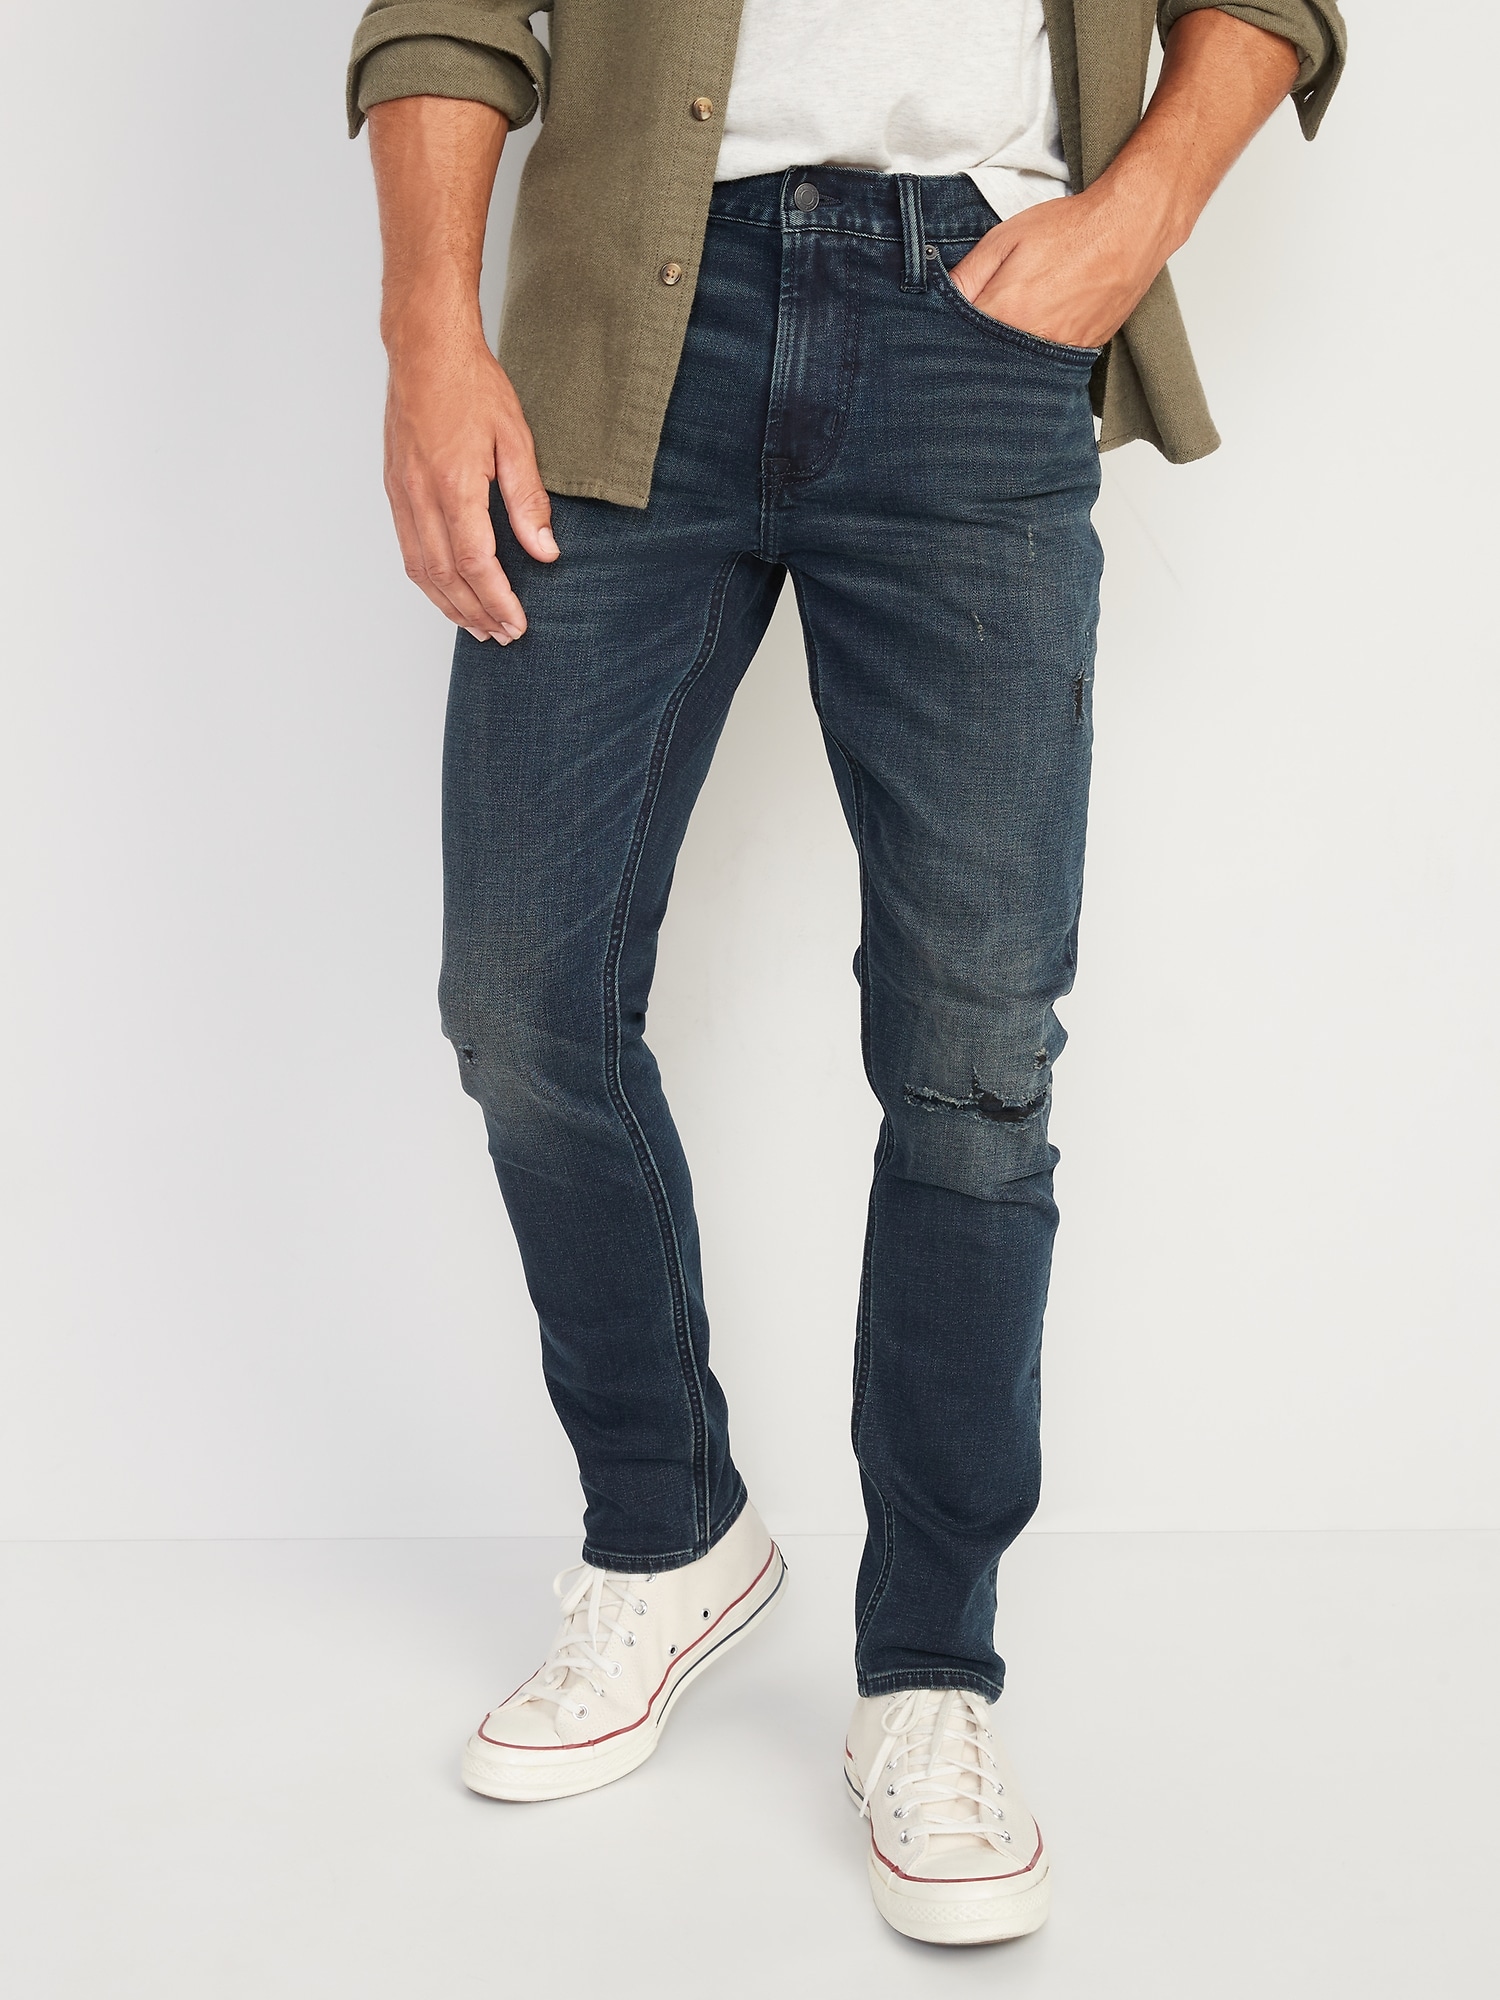 Old Navy Slim Built-In-Flex Ripped Jeans for Men blue. 1